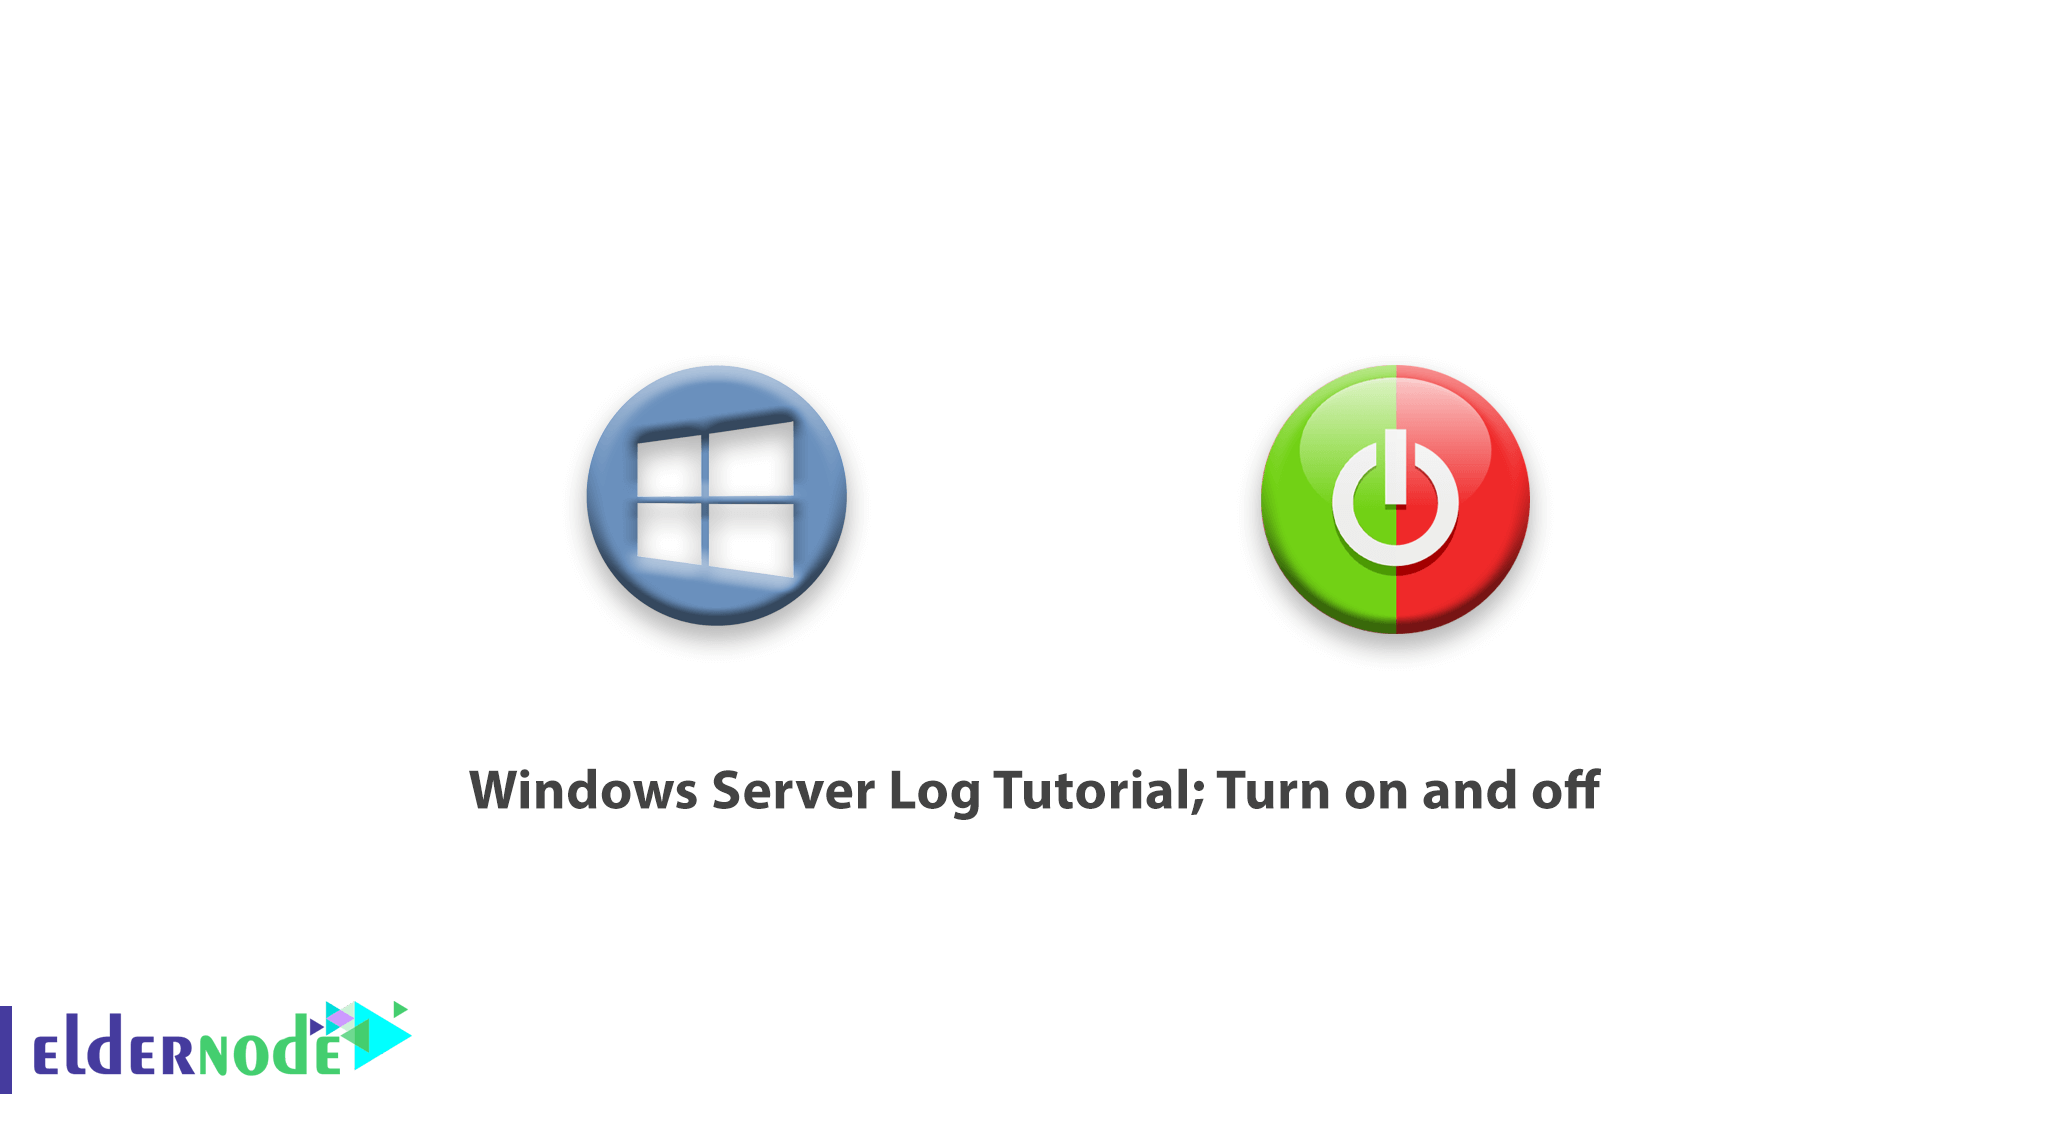 Windows Server Log Tutorial; Turn on and off